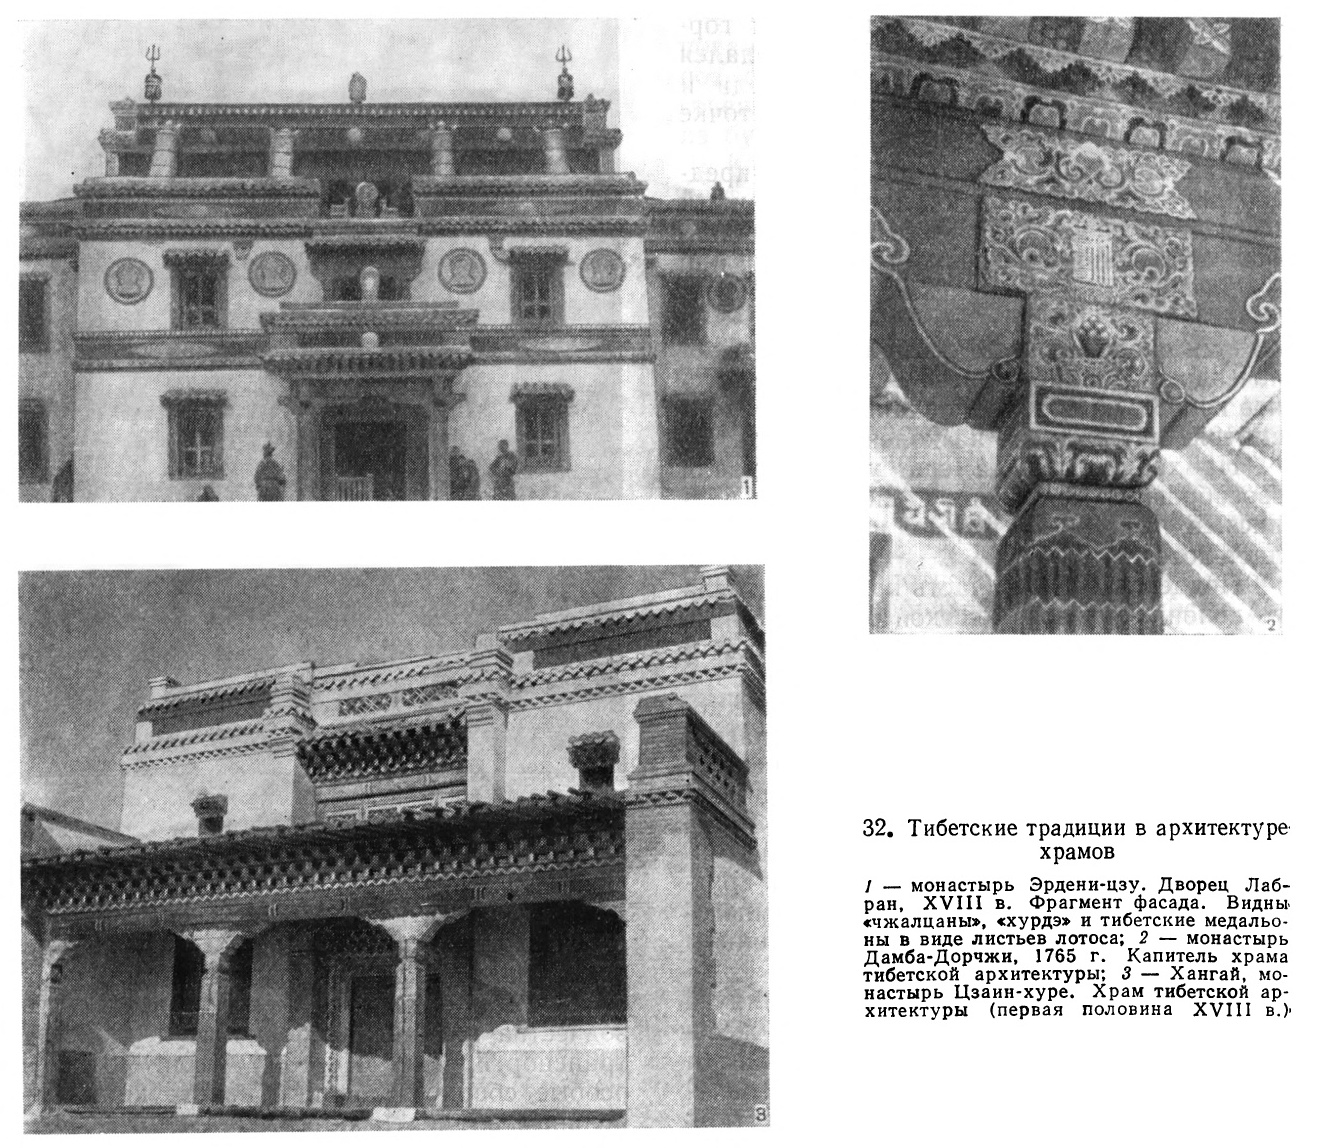 Тибетские традиции в архитектуре храмов